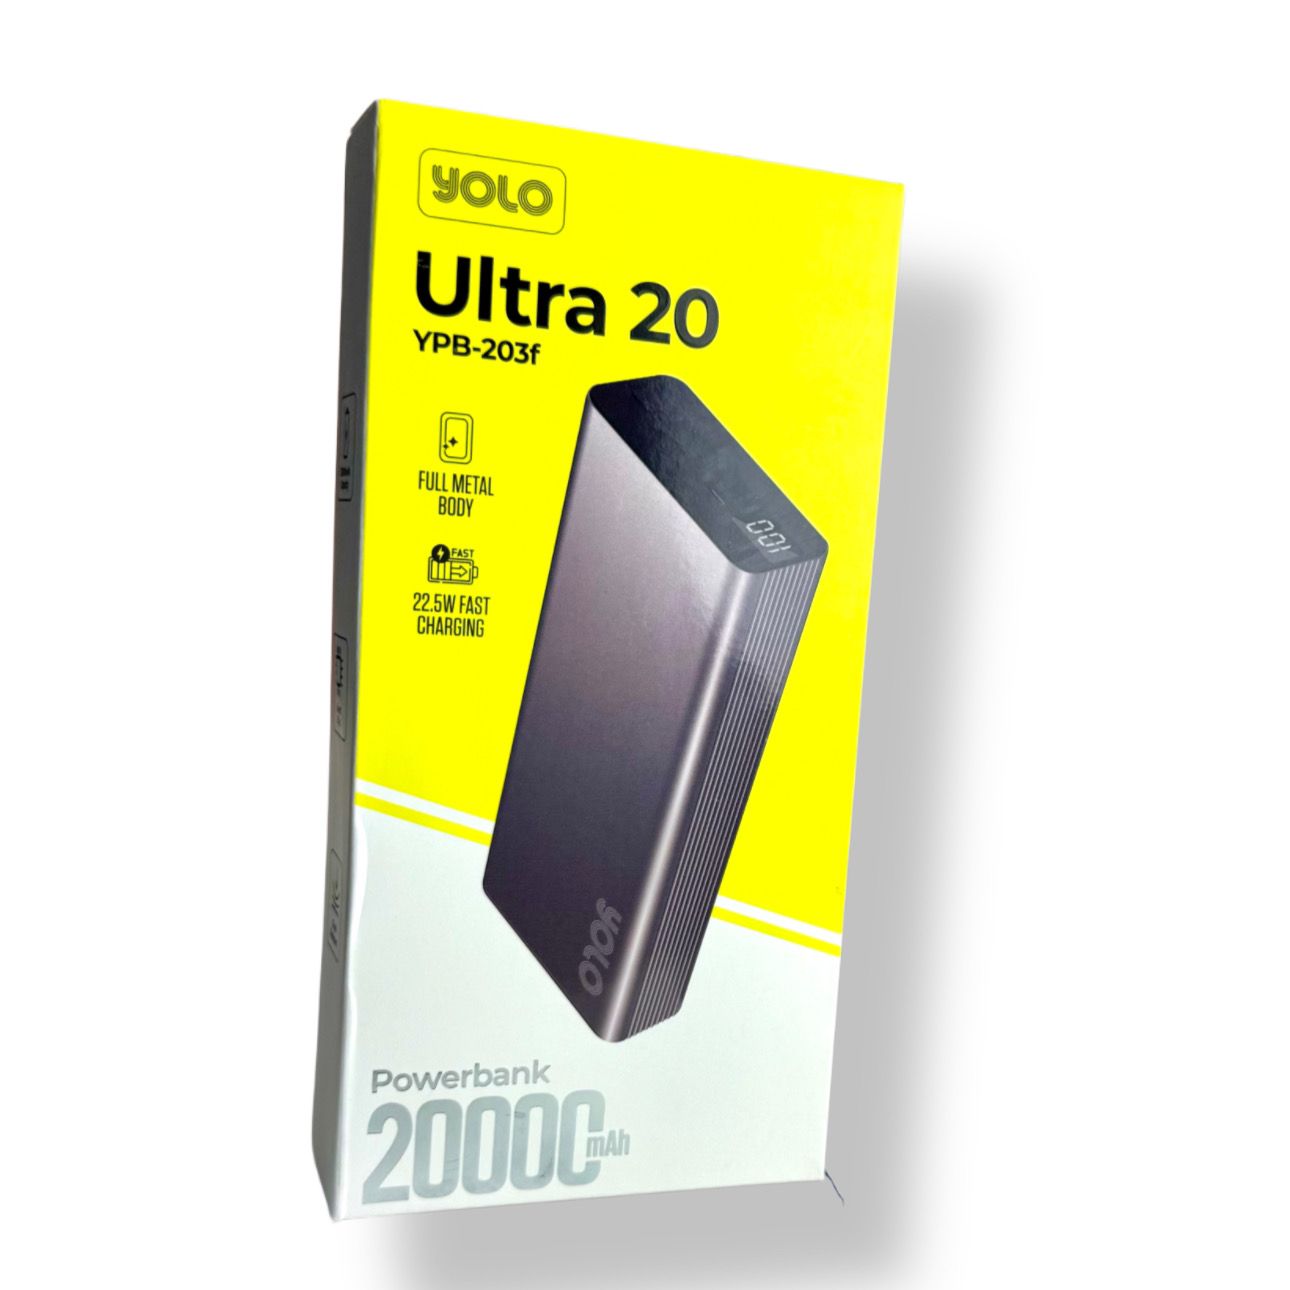 YOLO Ultra 20 Fast Charging Powerbank 20000mAh 22.5W